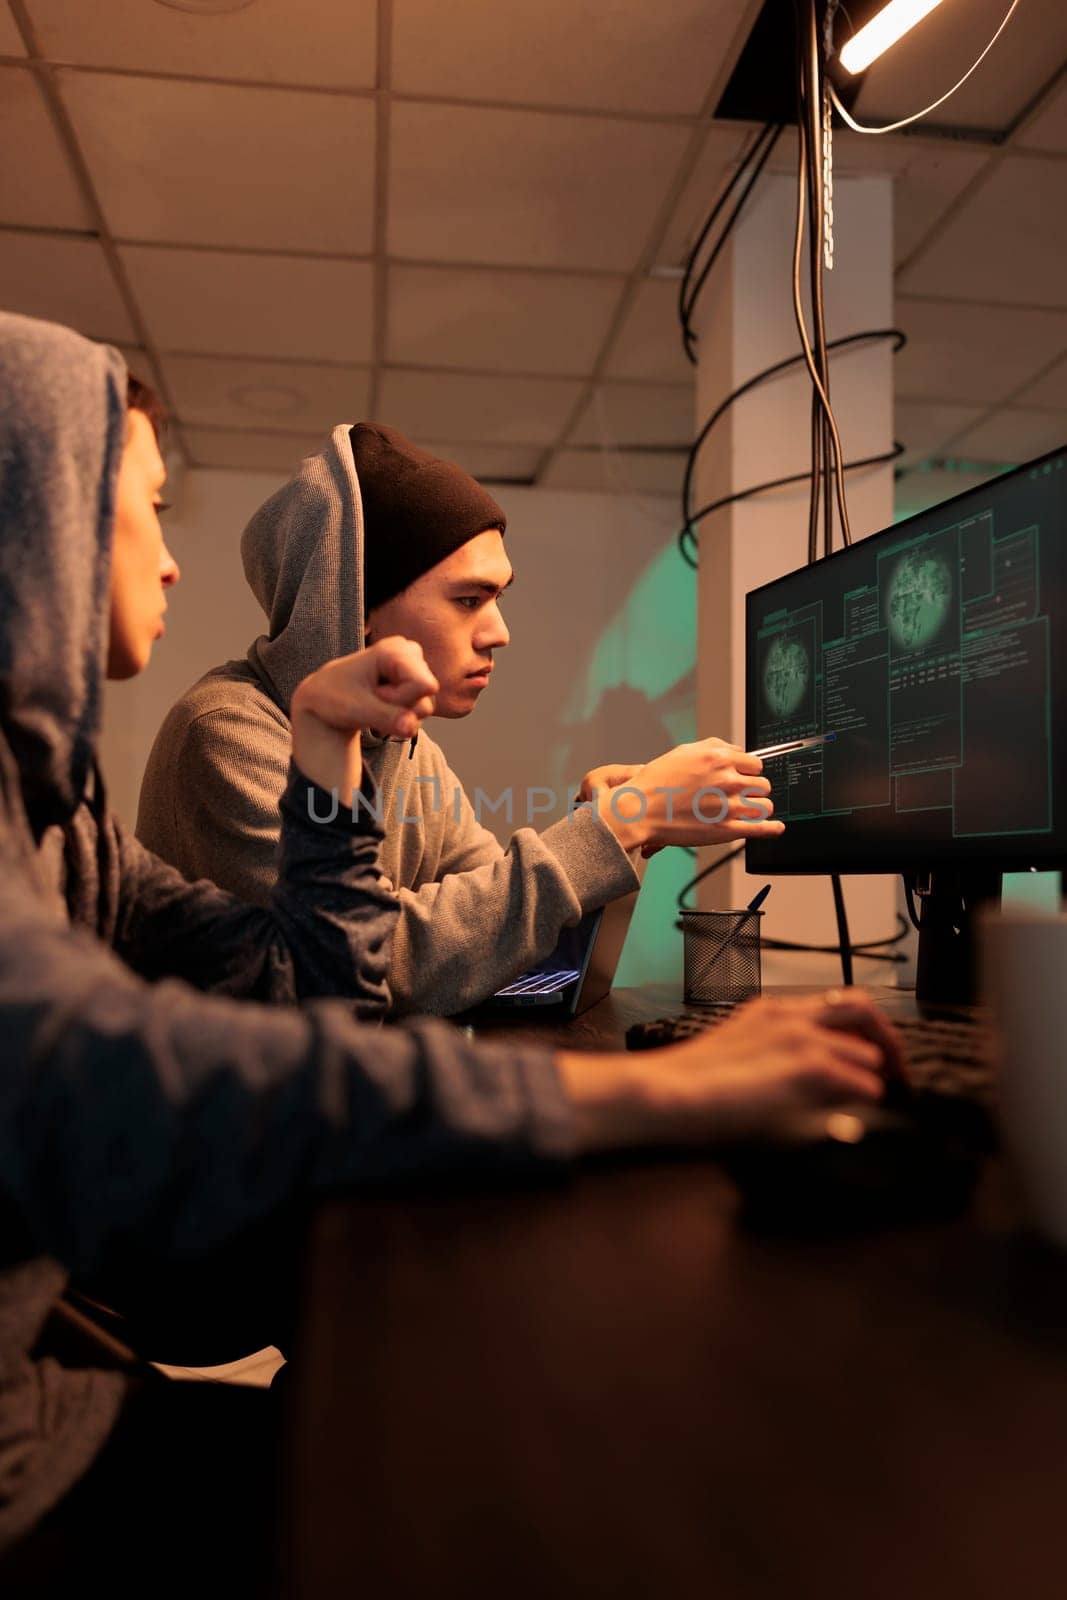 Spies team working on cyberterrorism with virus by DCStudio